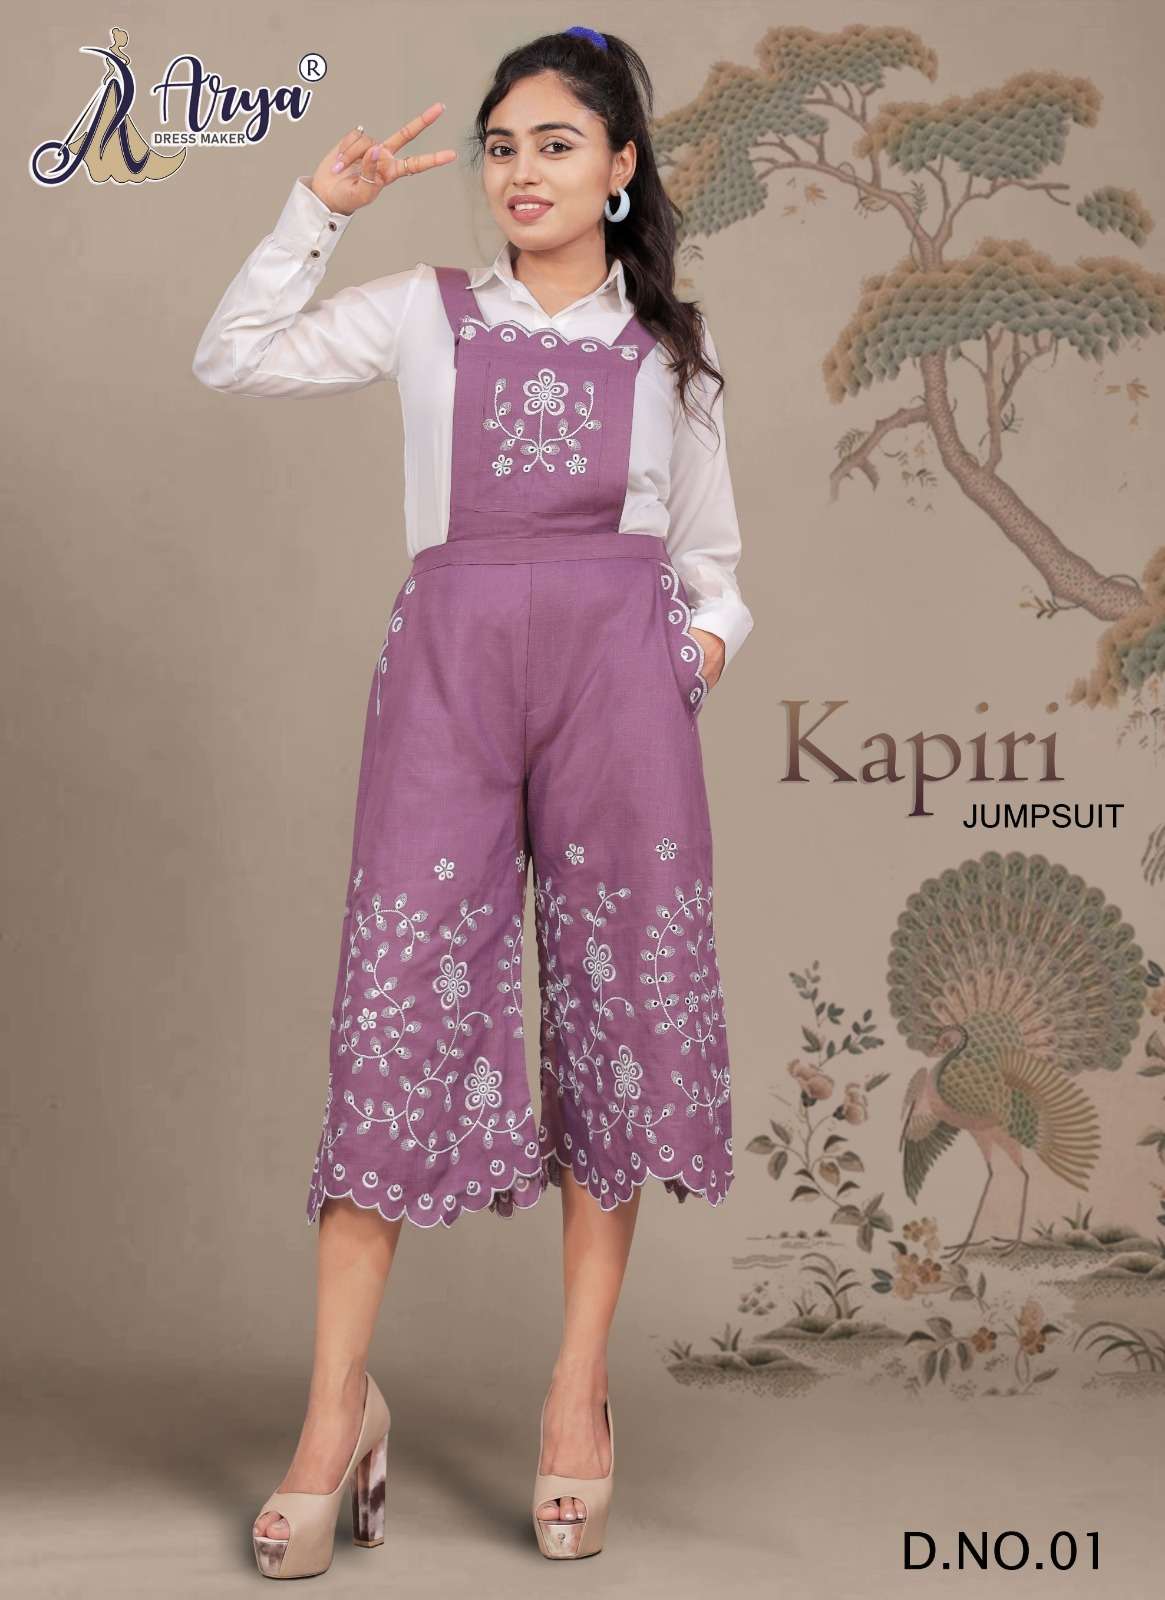 KAPIRI JUMPSUIT BY ARYA DRESS MAKER 01 TO 04 SERIES COTTON JUMPSUIT